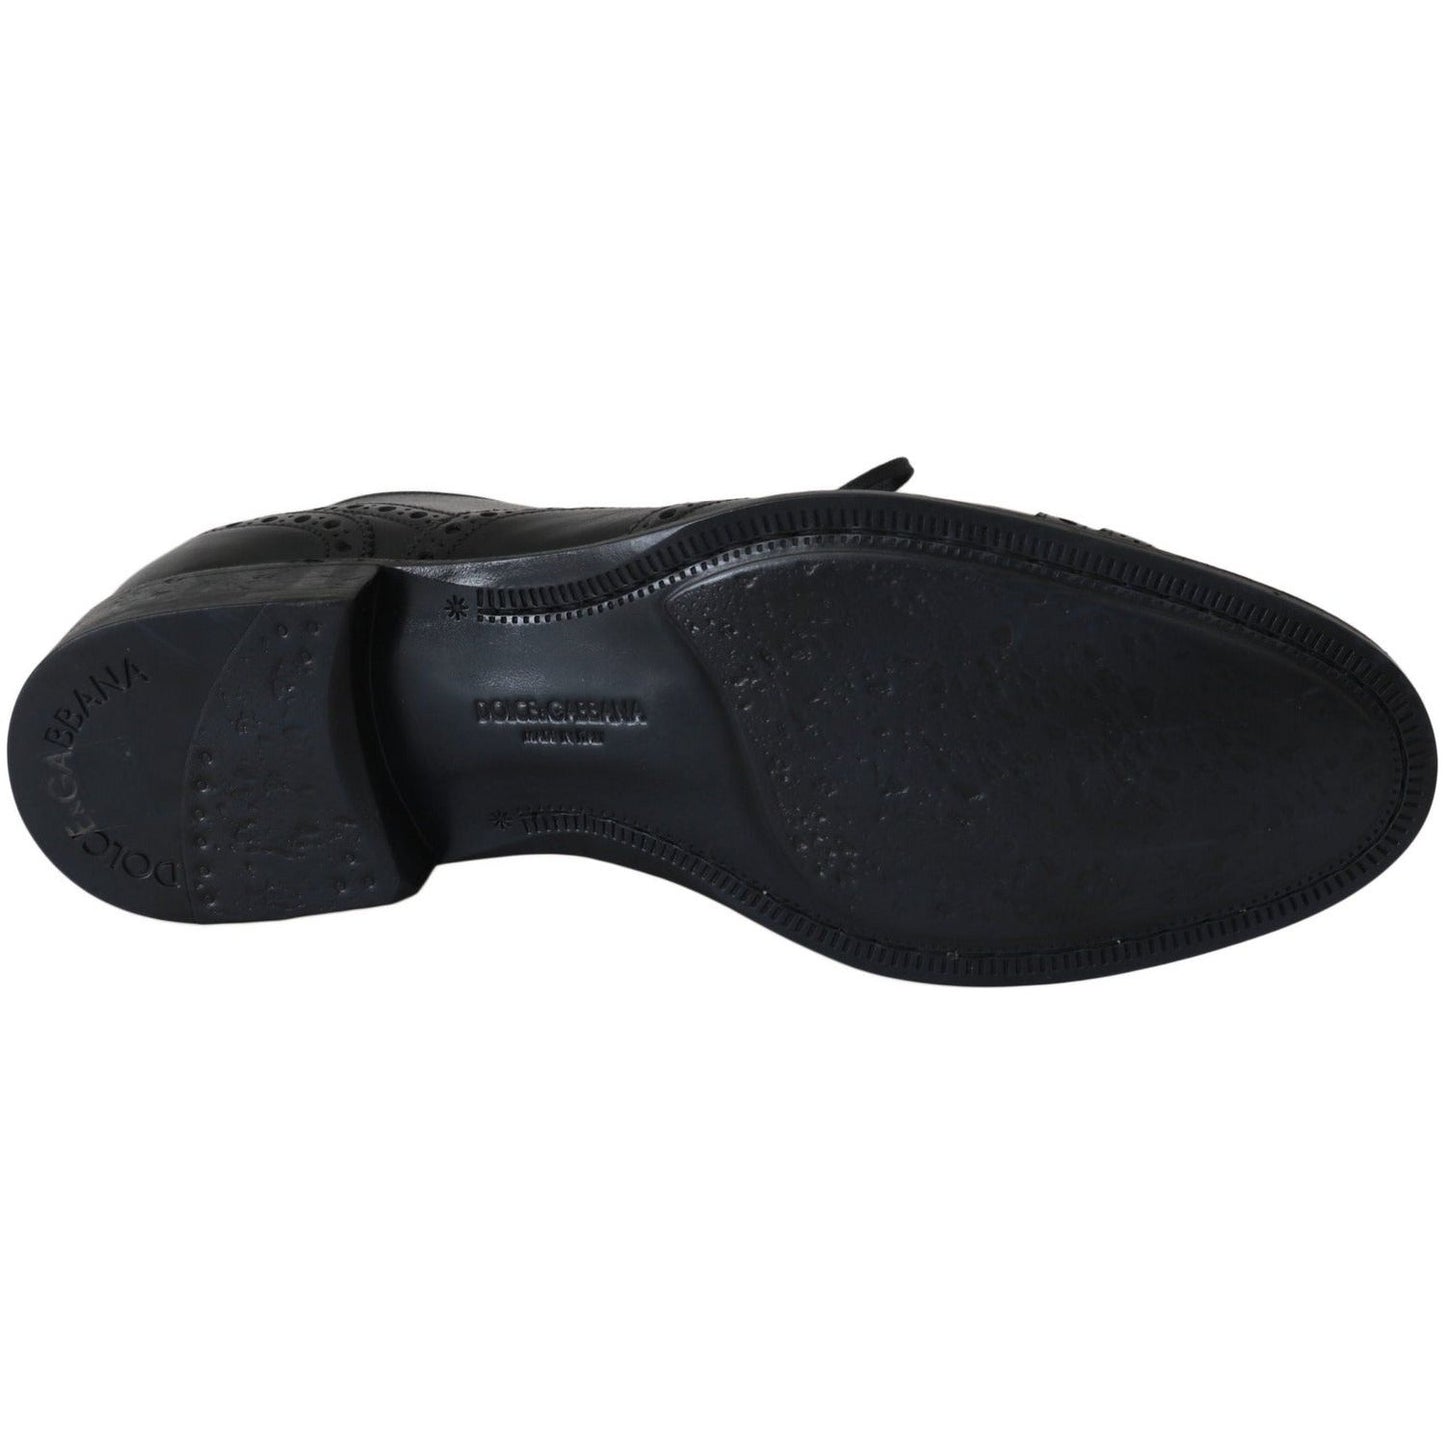 Dolce & Gabbana Elegant Black Leather Derby Wingtip Dress Shoes Dress Shoes black-leather-wingtip-oxford-dress-shoes